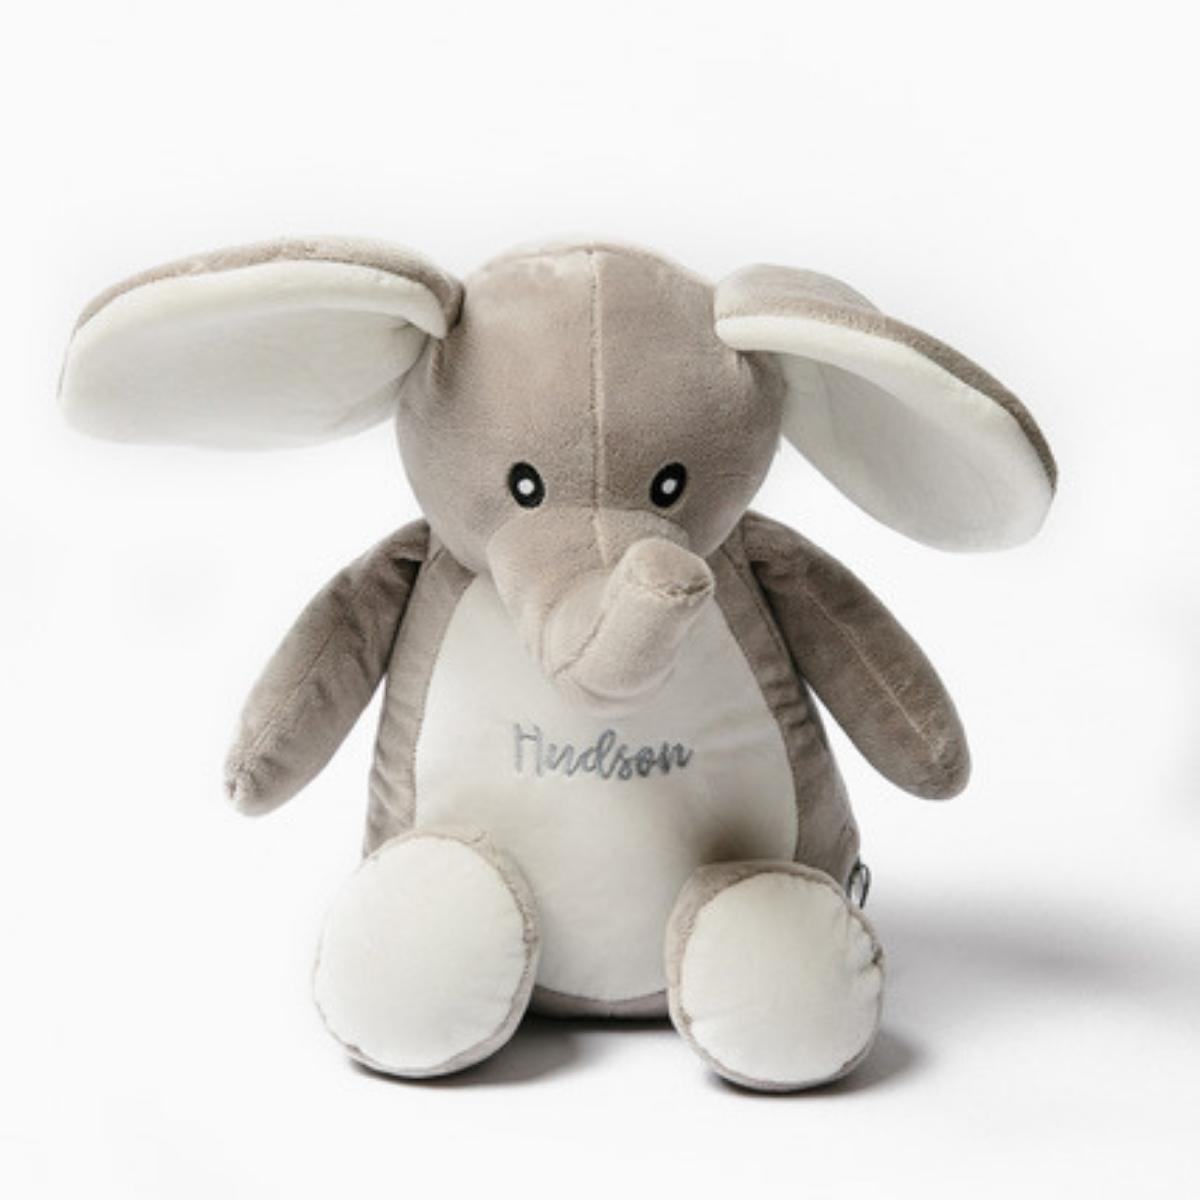 Personalised Baby Blanket and Soft Elephant Bundle